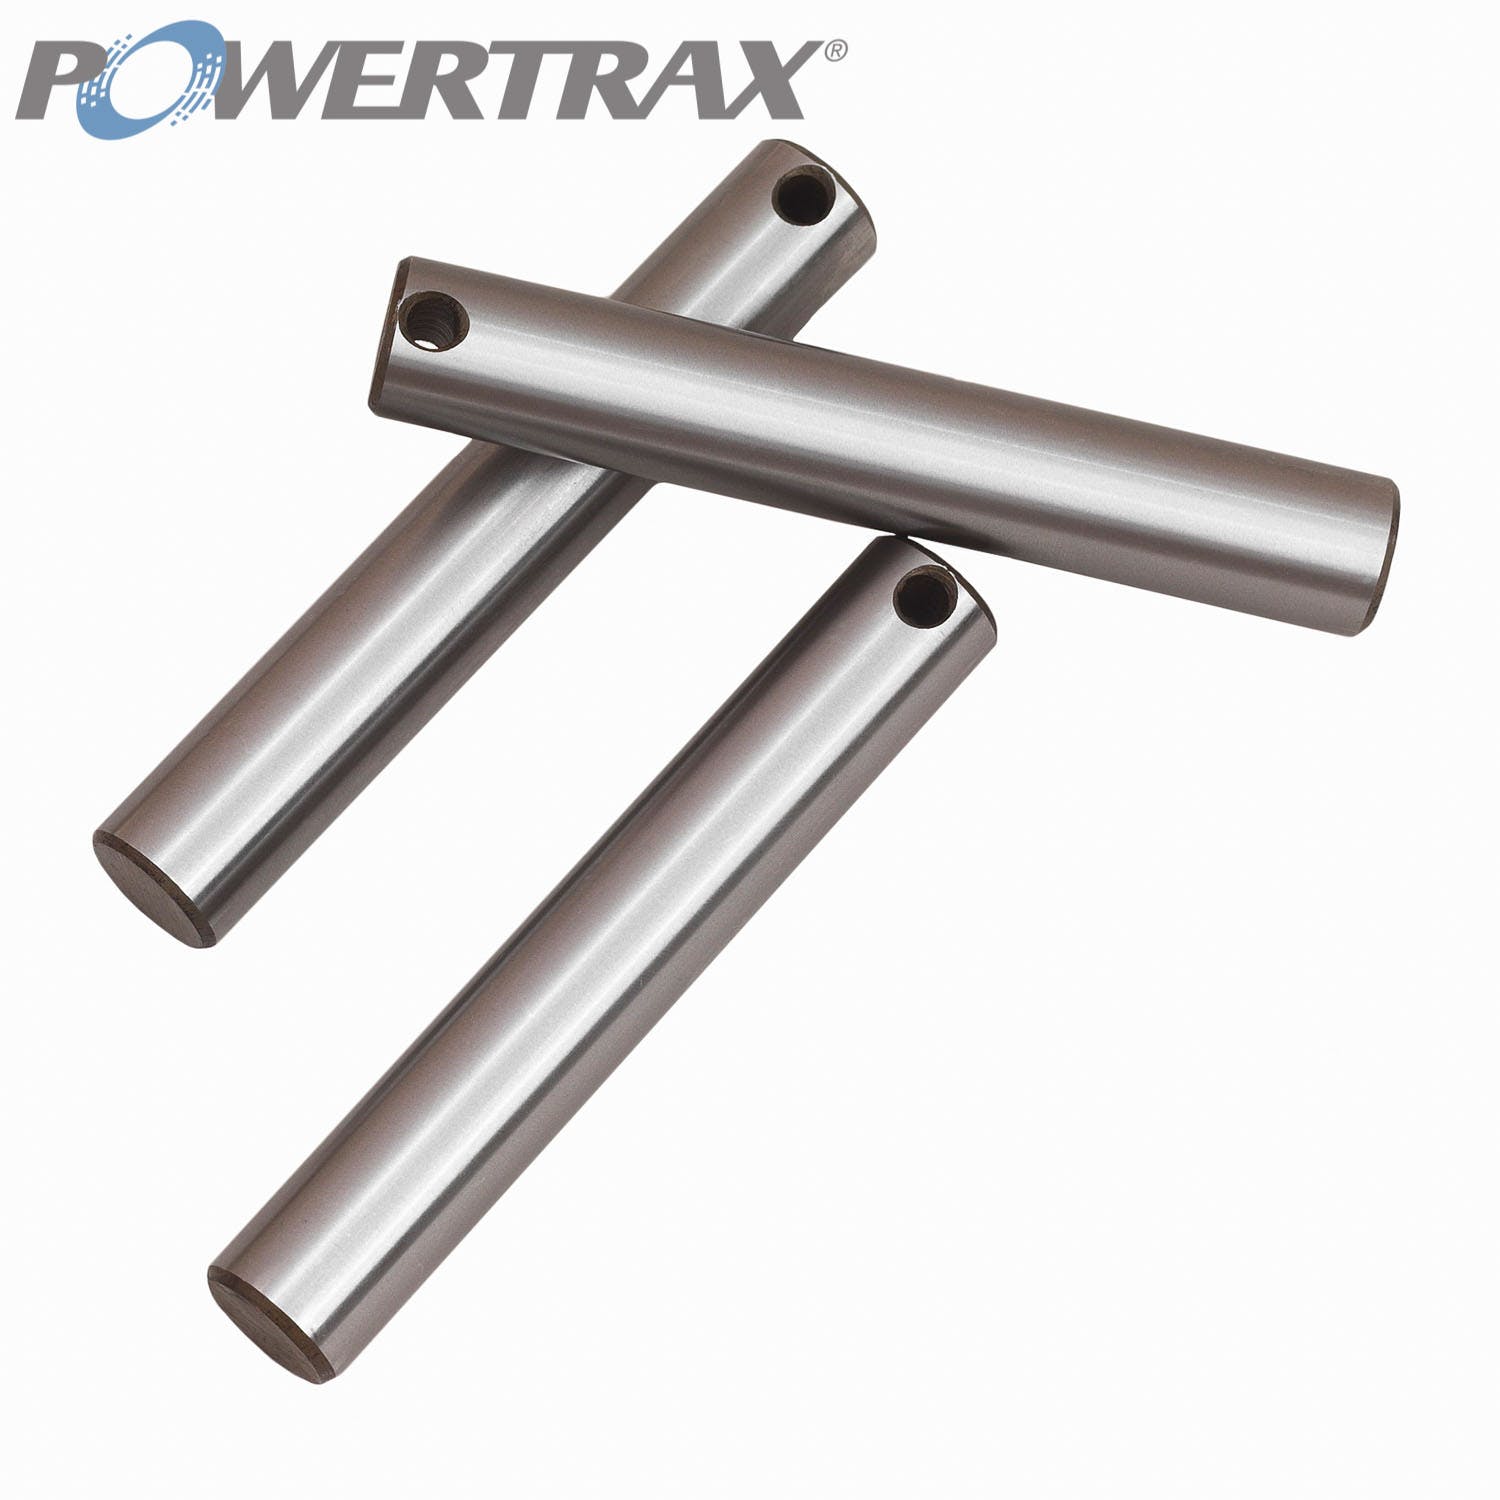 PowerTrax SG1920 Differential Pinion Shaft